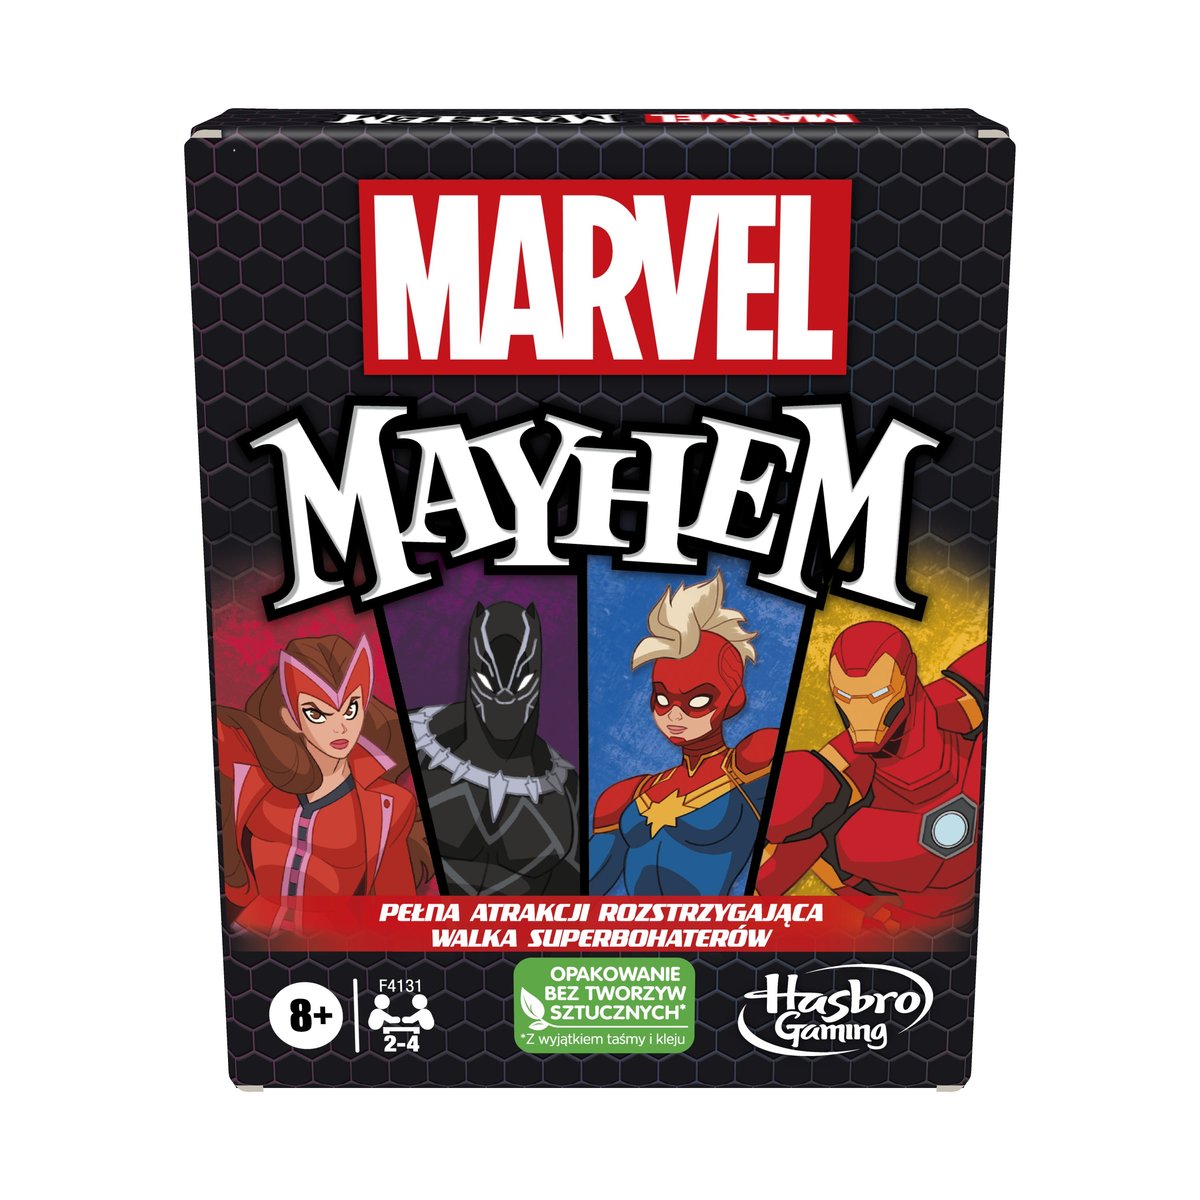 Hasbro Gaming, gra karciana Marvel Mayhem, F4131